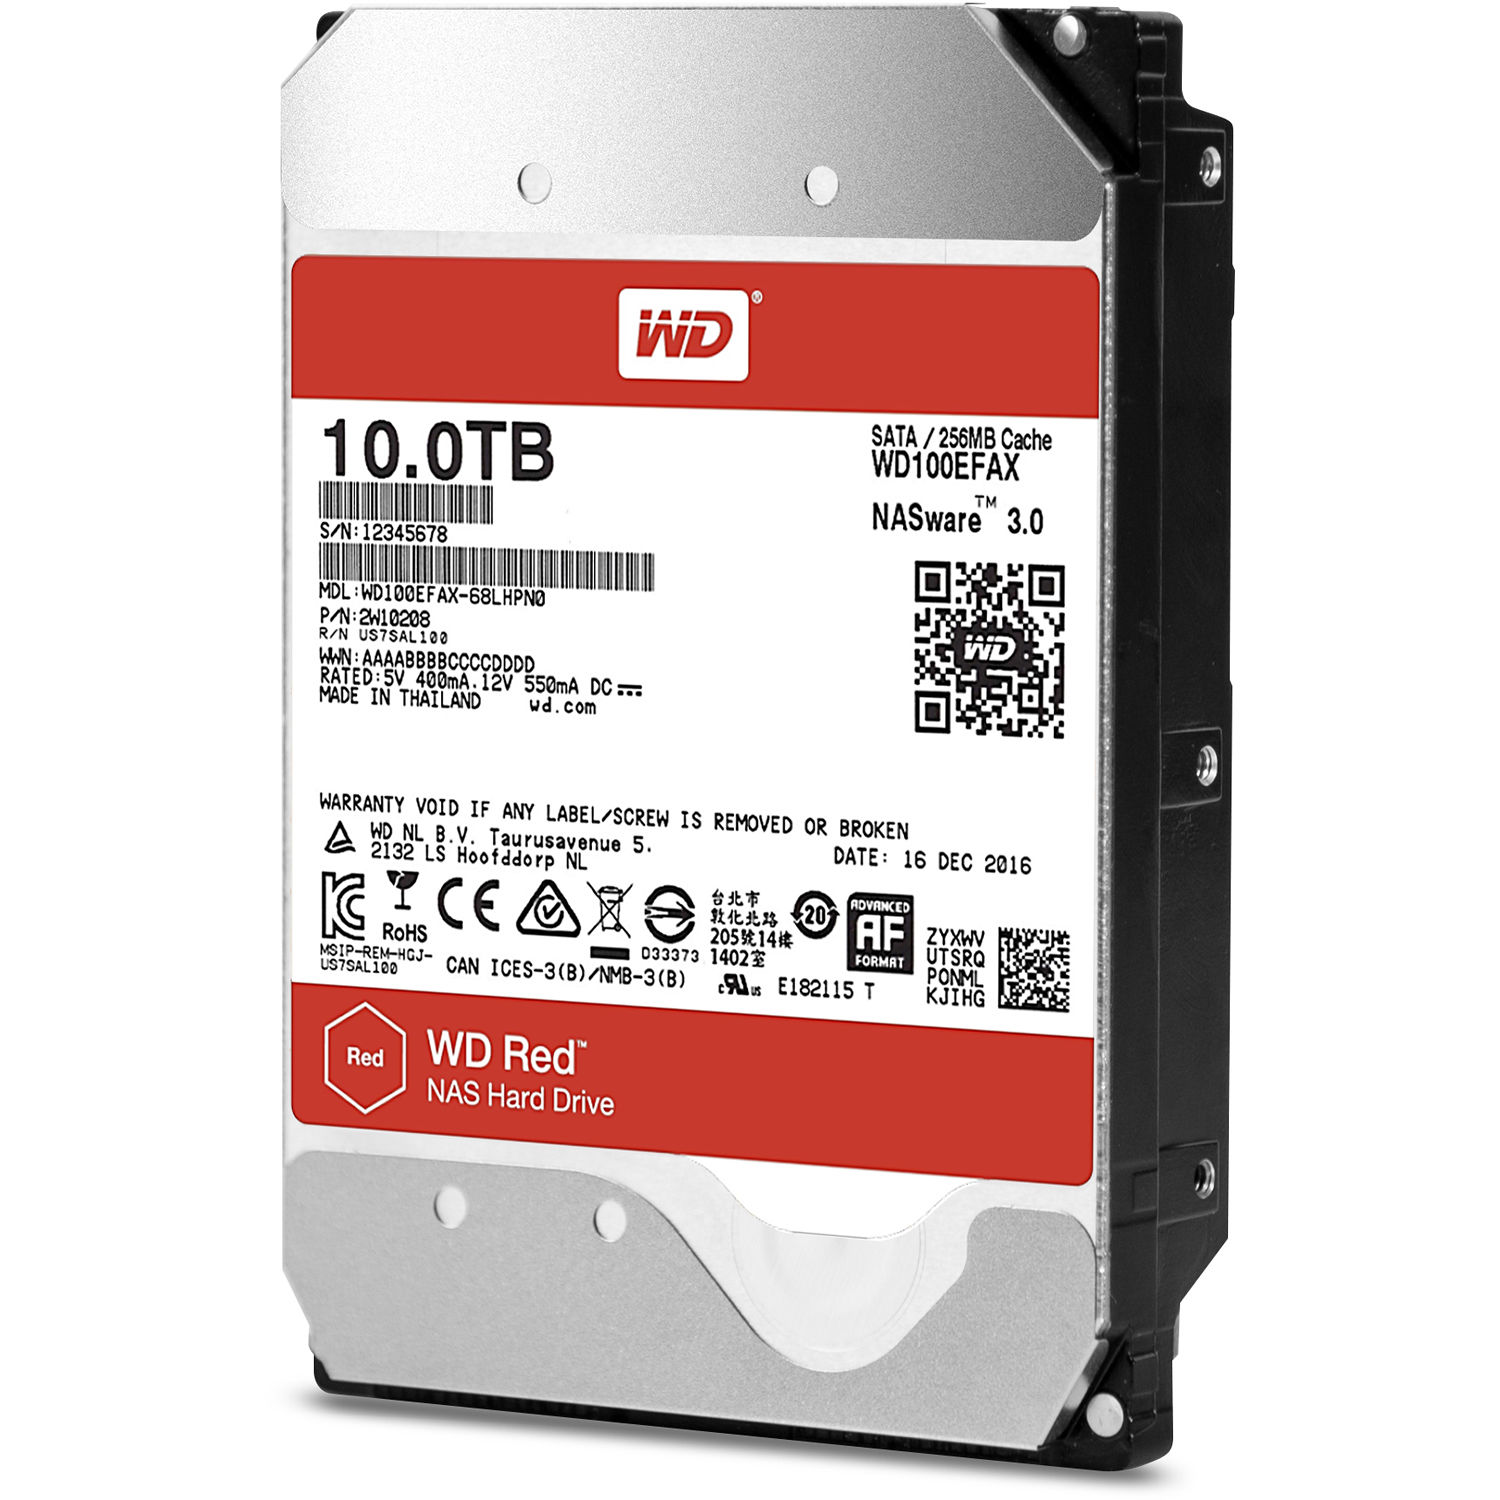 ổ cứng HDD WD 10TB WD100EFAX Sata 3 (Đỏ)